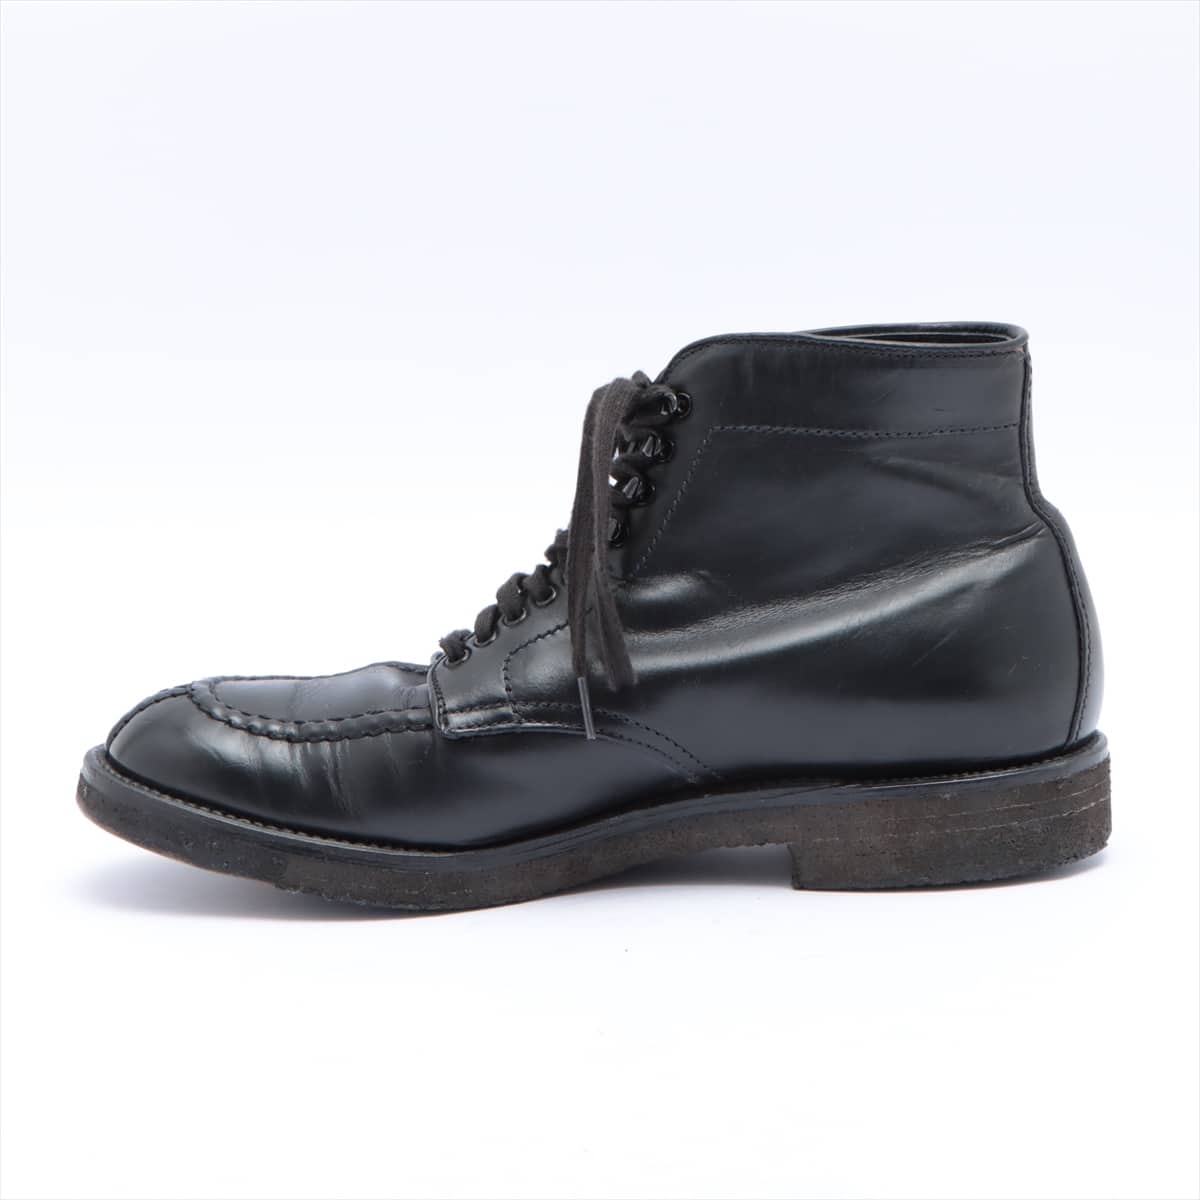 Alden Leather Boots 8 Men's Black 45491H chrome excel crepe sole Tanker